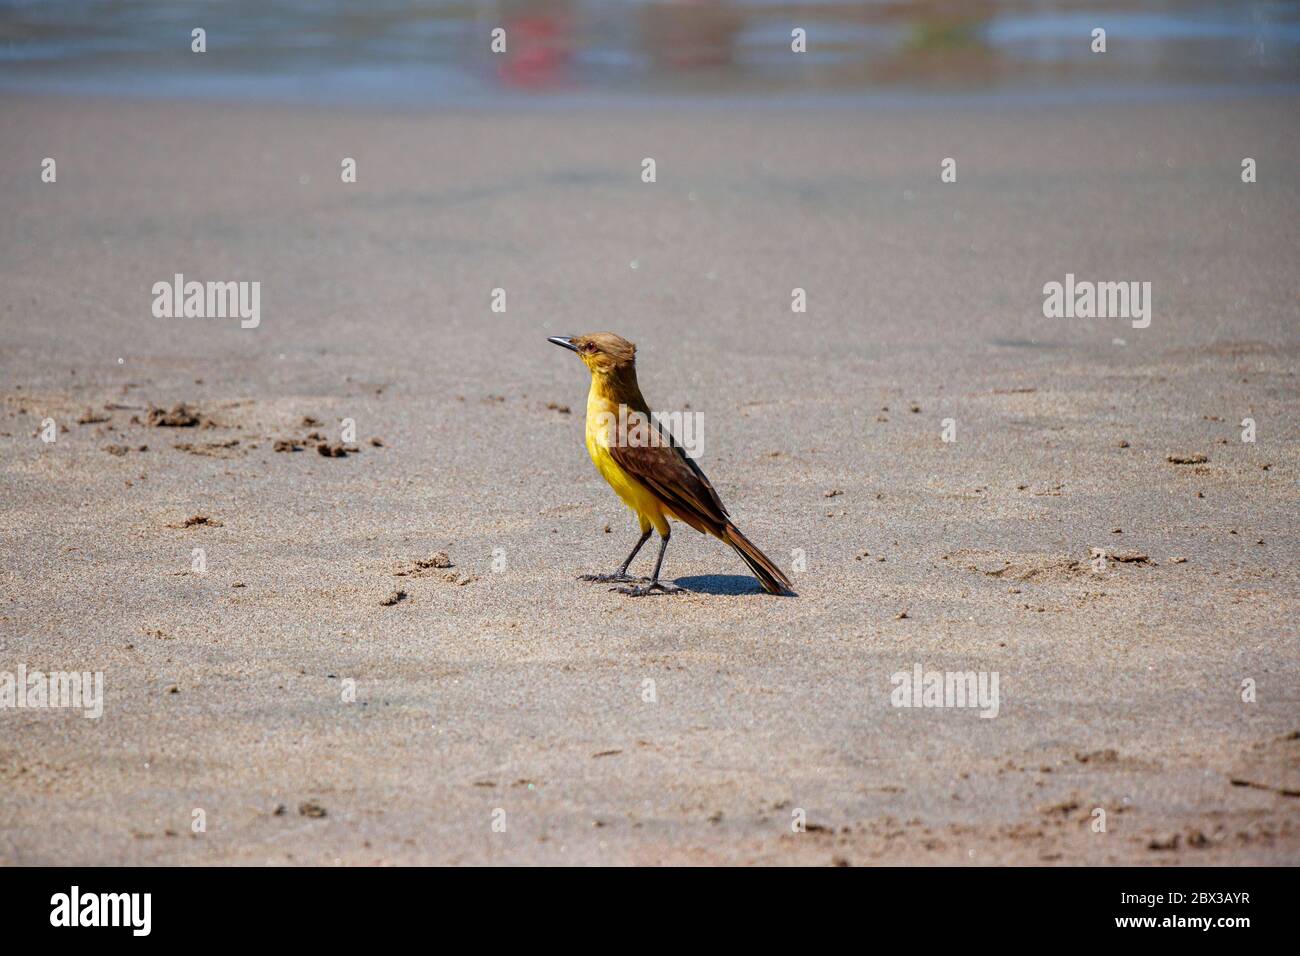 A yellow tropical bird standing on a beach sand Stock Photo